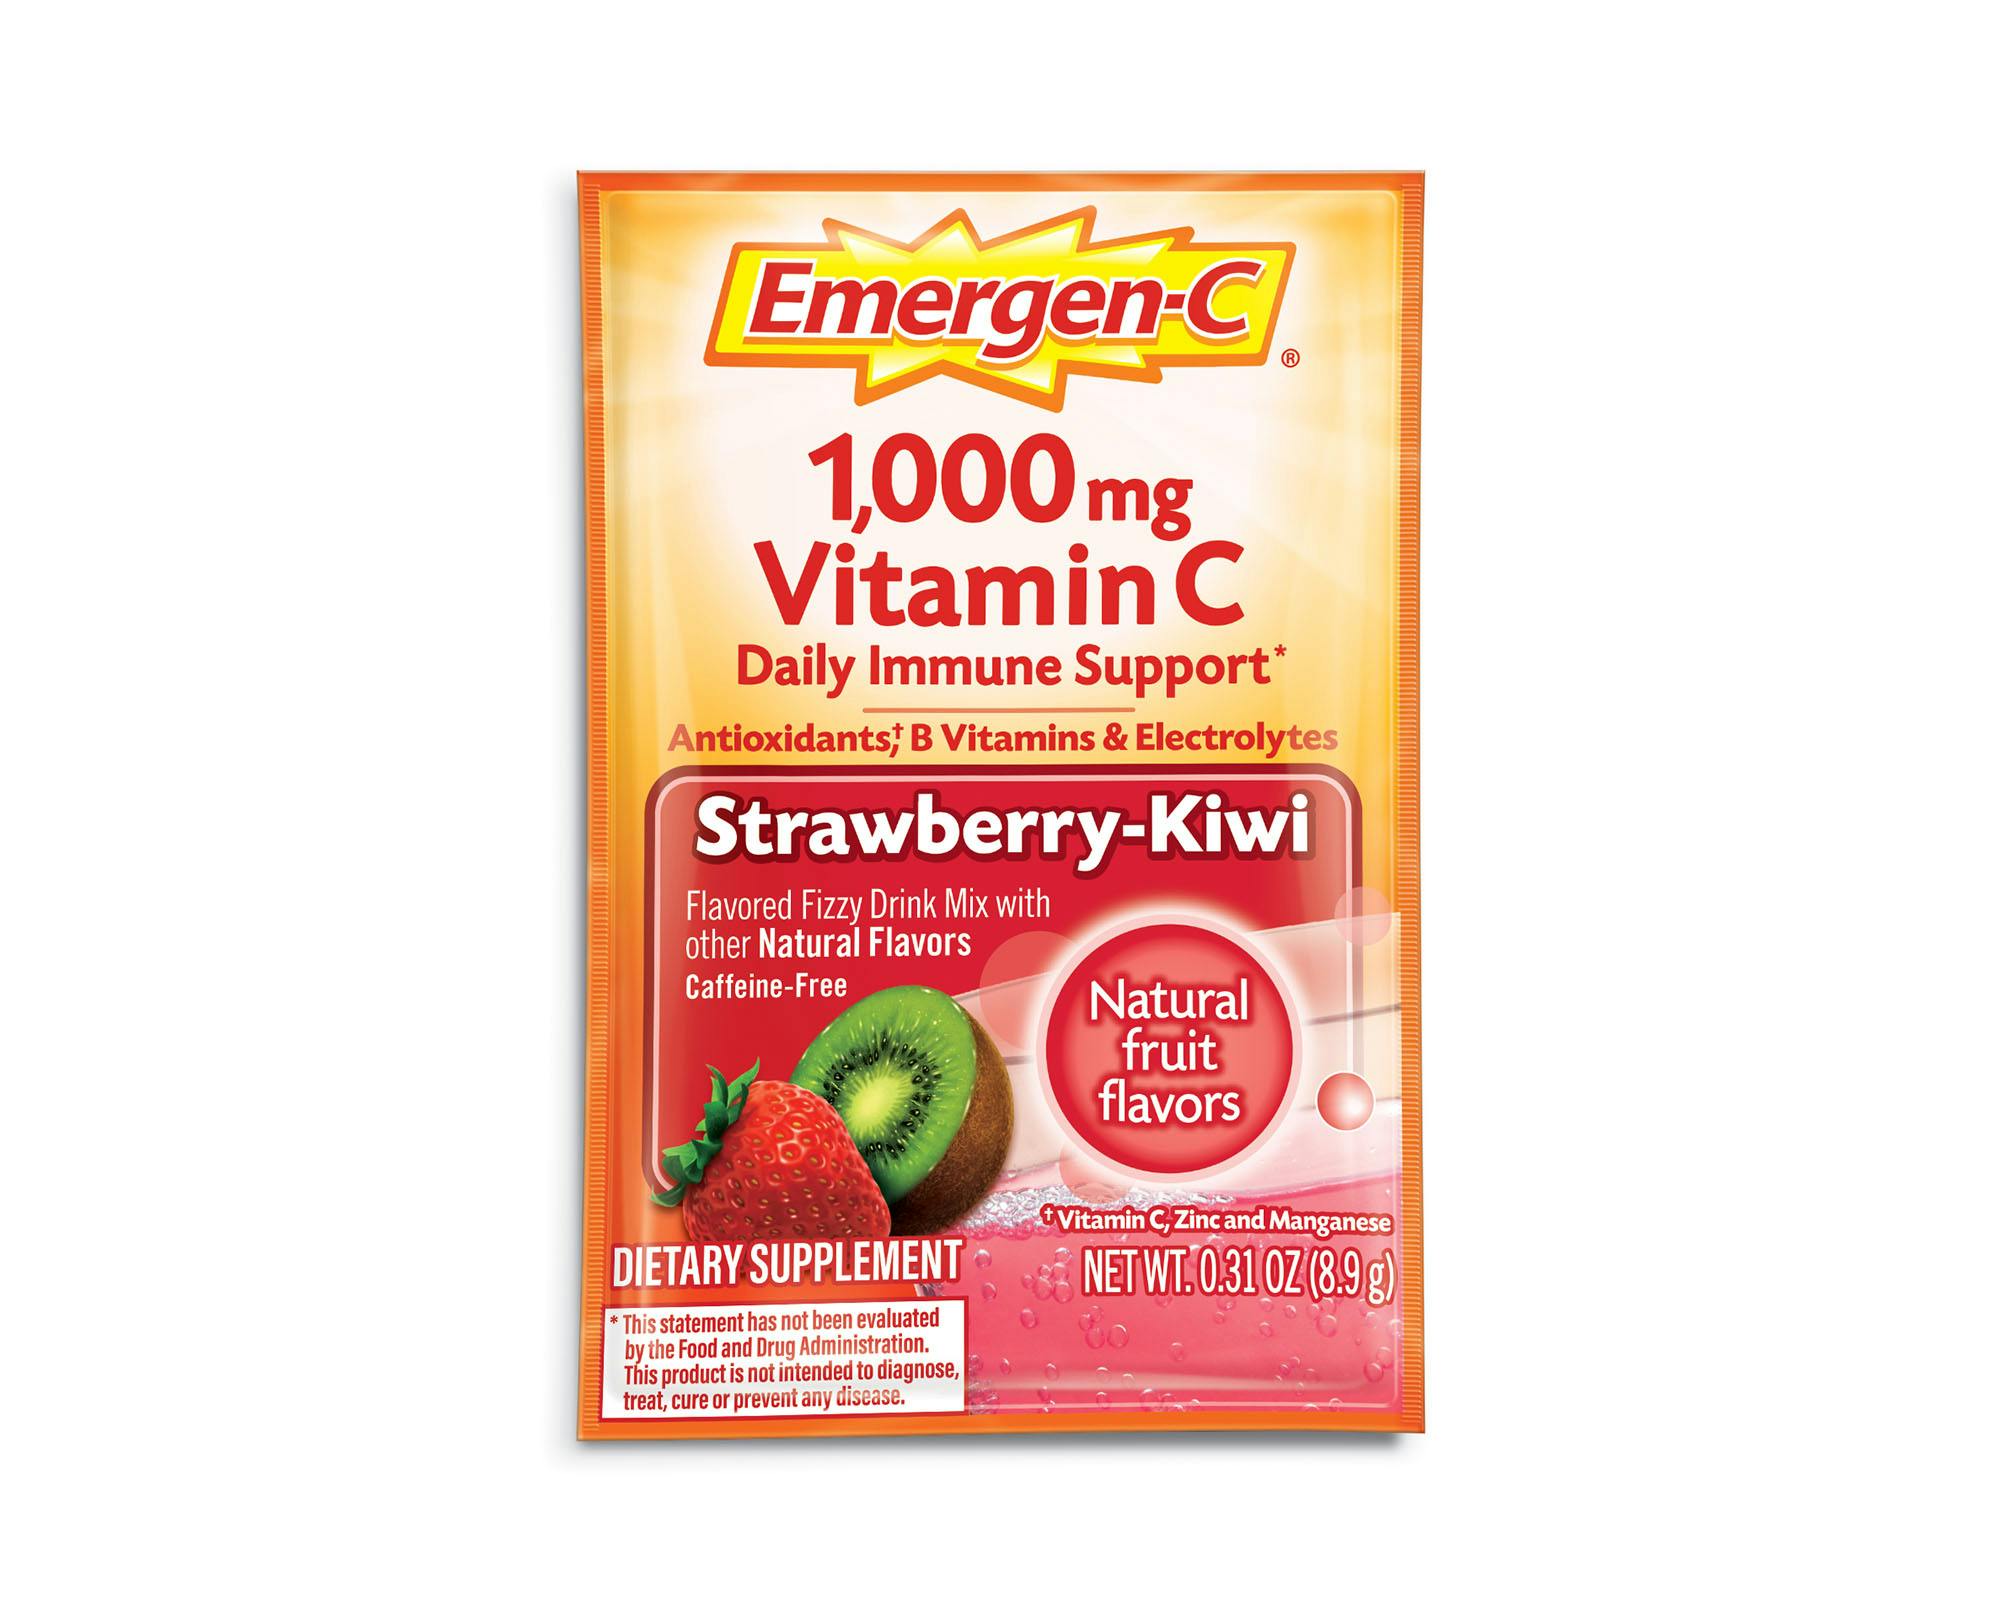 Strawberry-Kiwi Original Immune Support packet